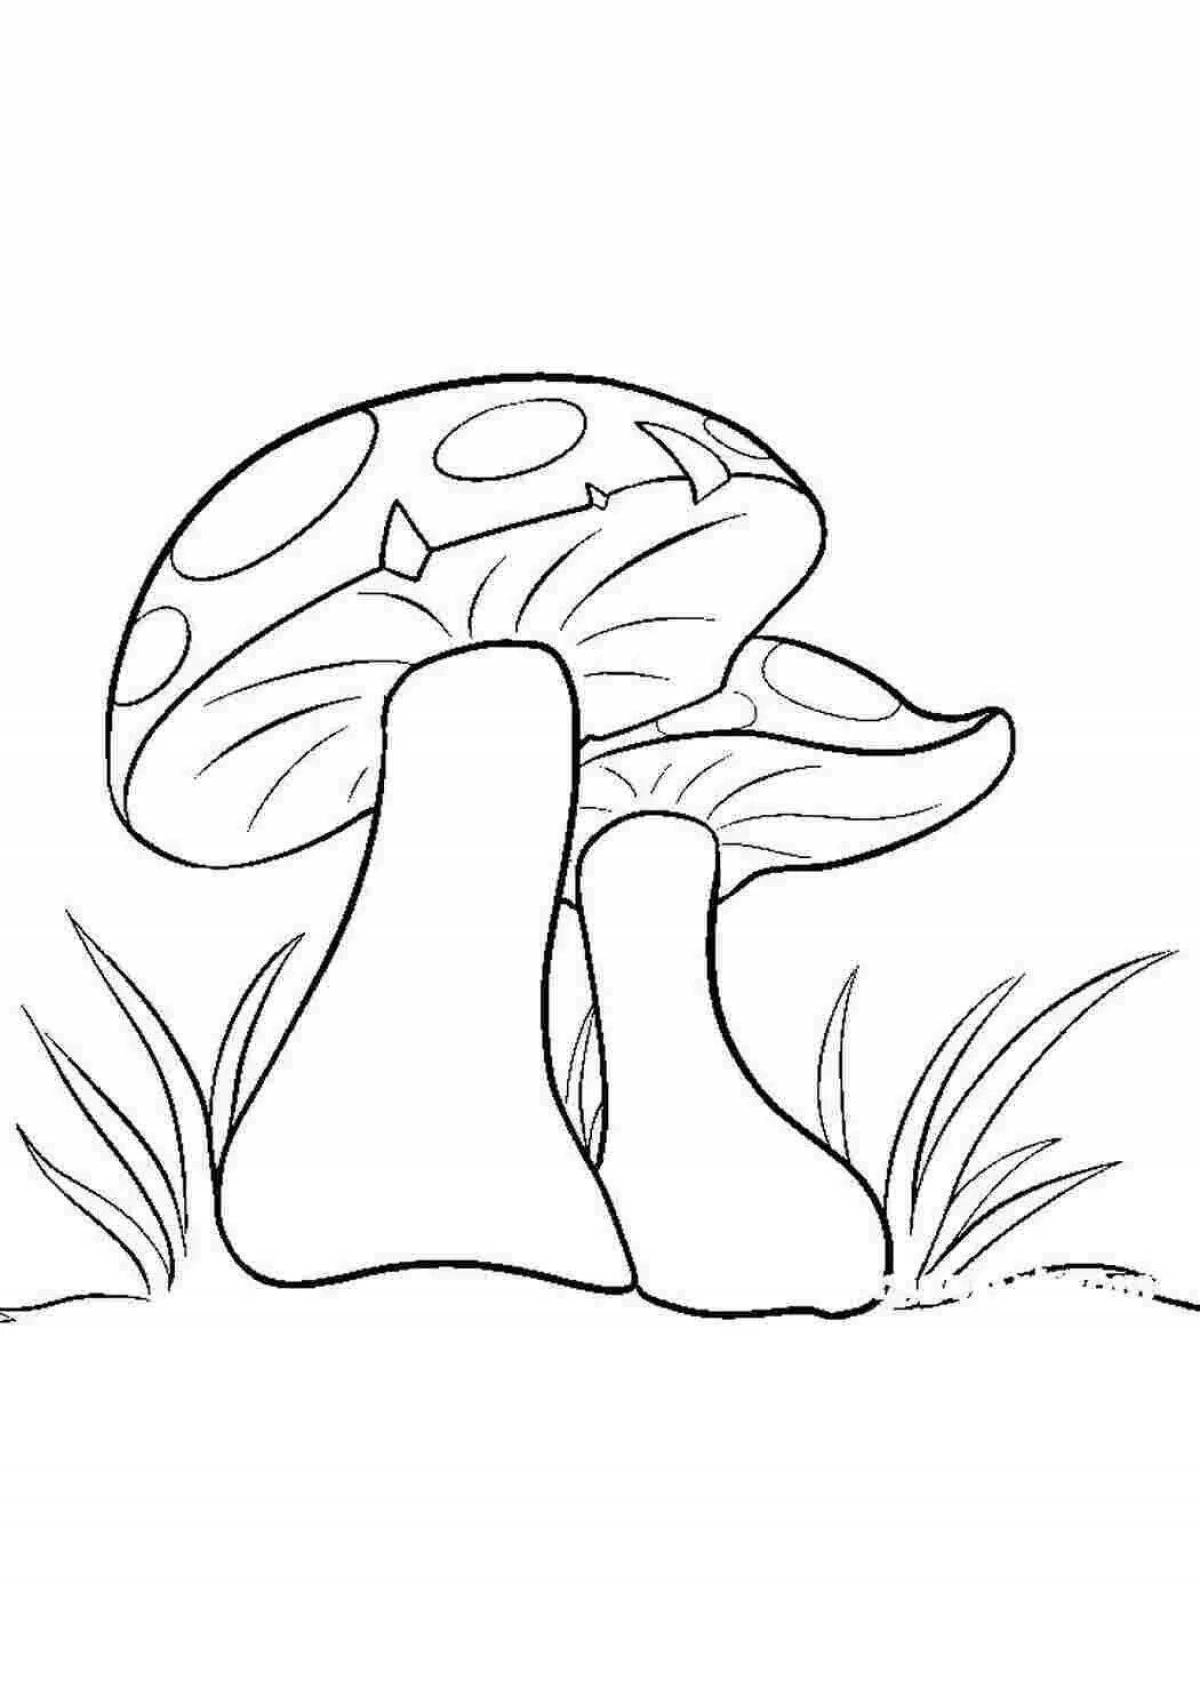 Amazing mushroom coloring page